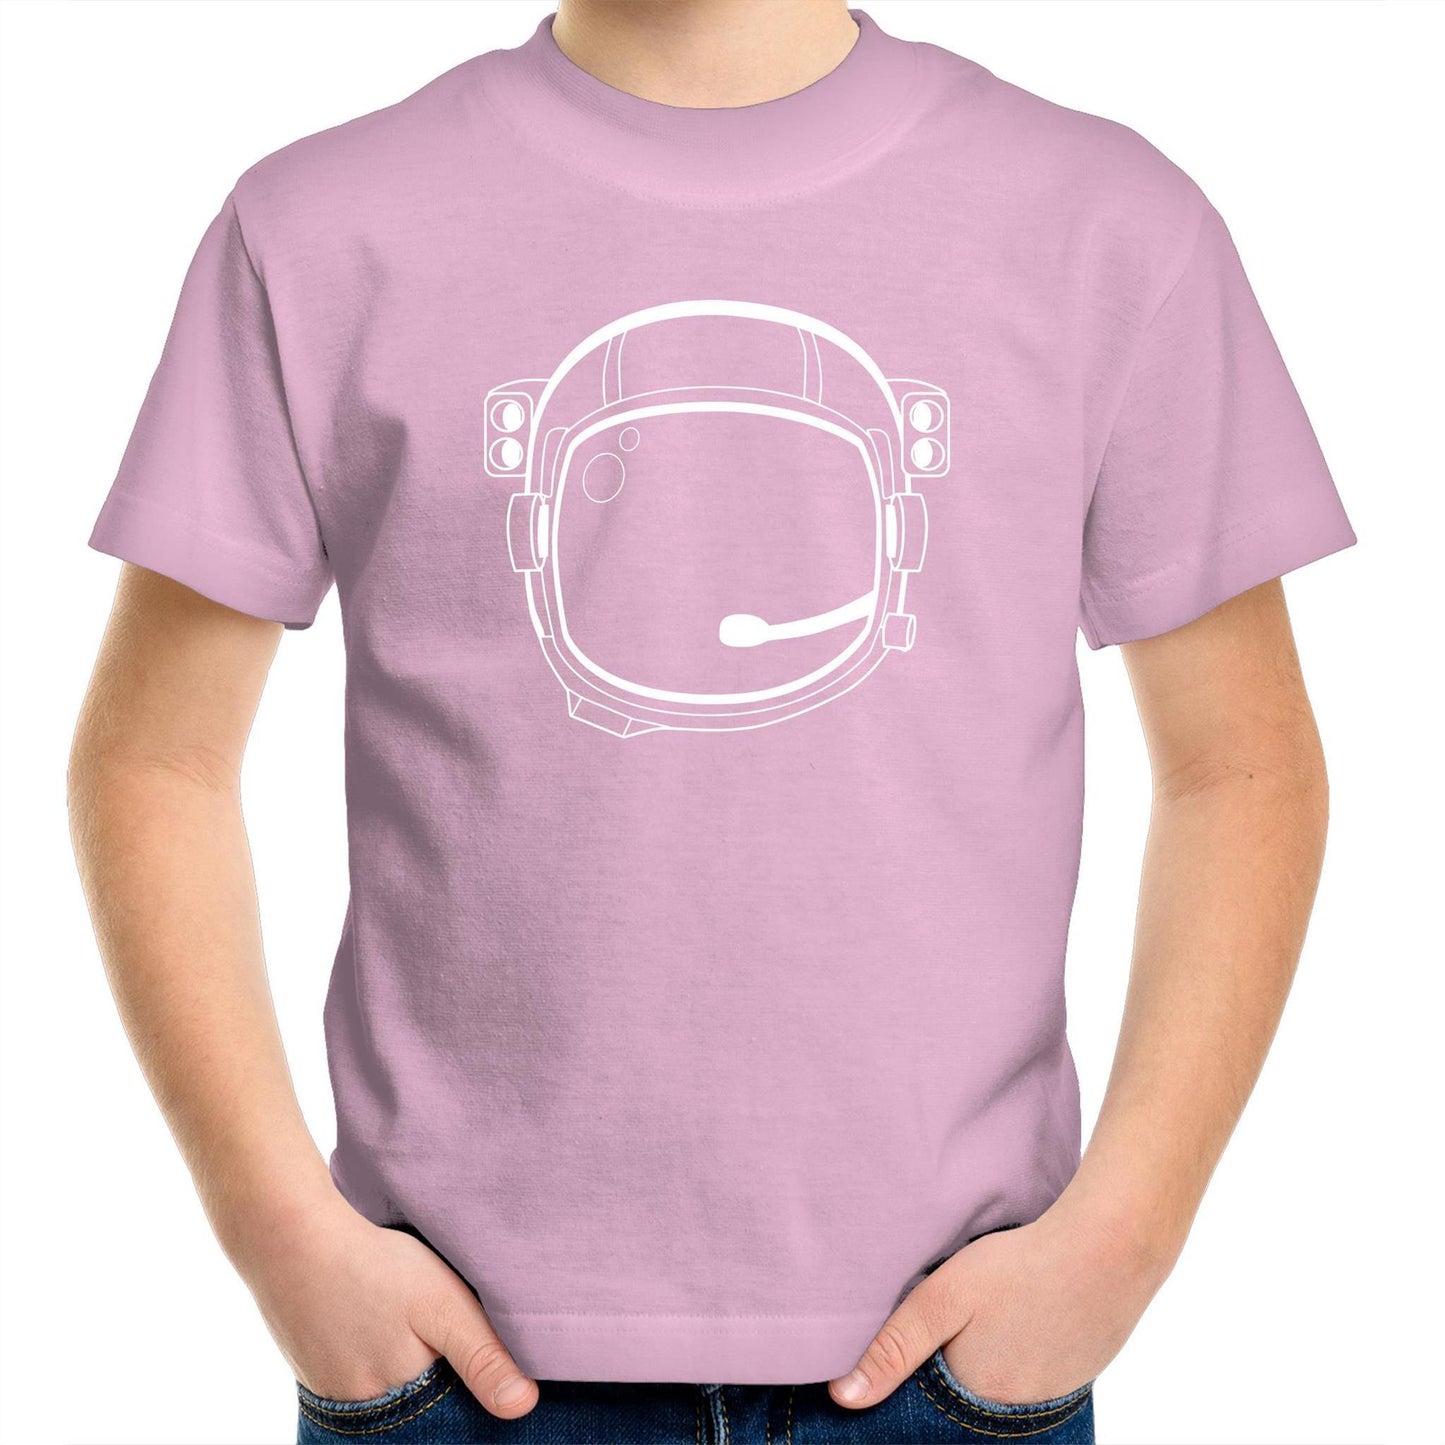 Astronaut Helmet - Kids Youth Crew T-Shirt Pink Kids Youth T-shirt Space